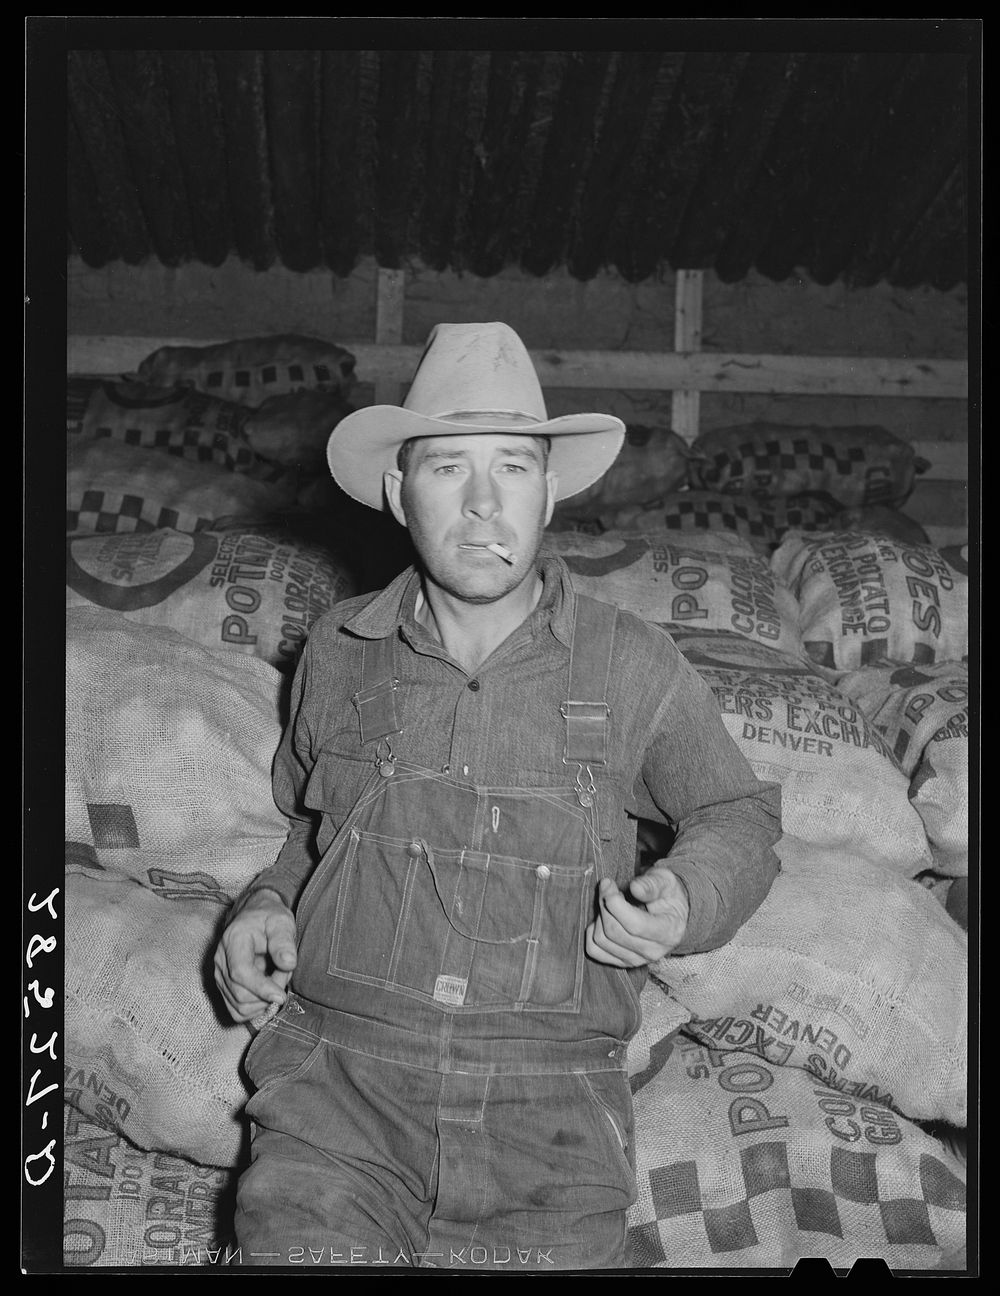 Farmer in potato cellar. Monte Vista, Colorado. Sourced from the Library of Congress.